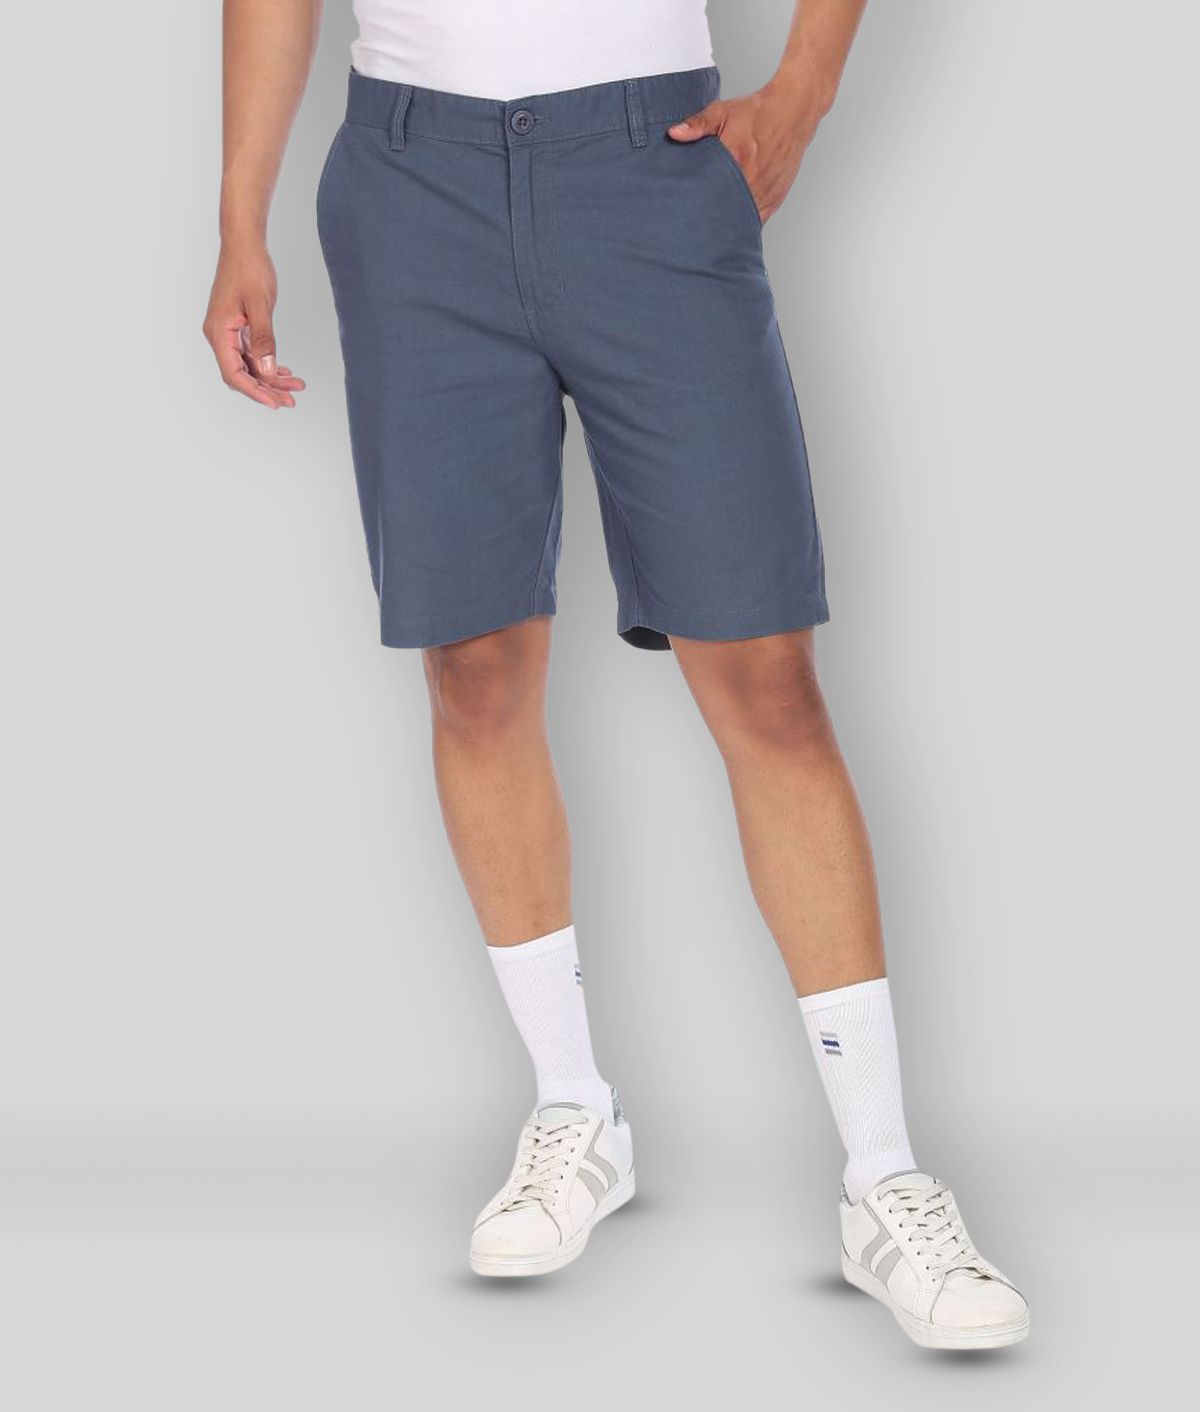 Ruggers - Cotton Blend Blue Men's Shorts ( Pack of 1 )